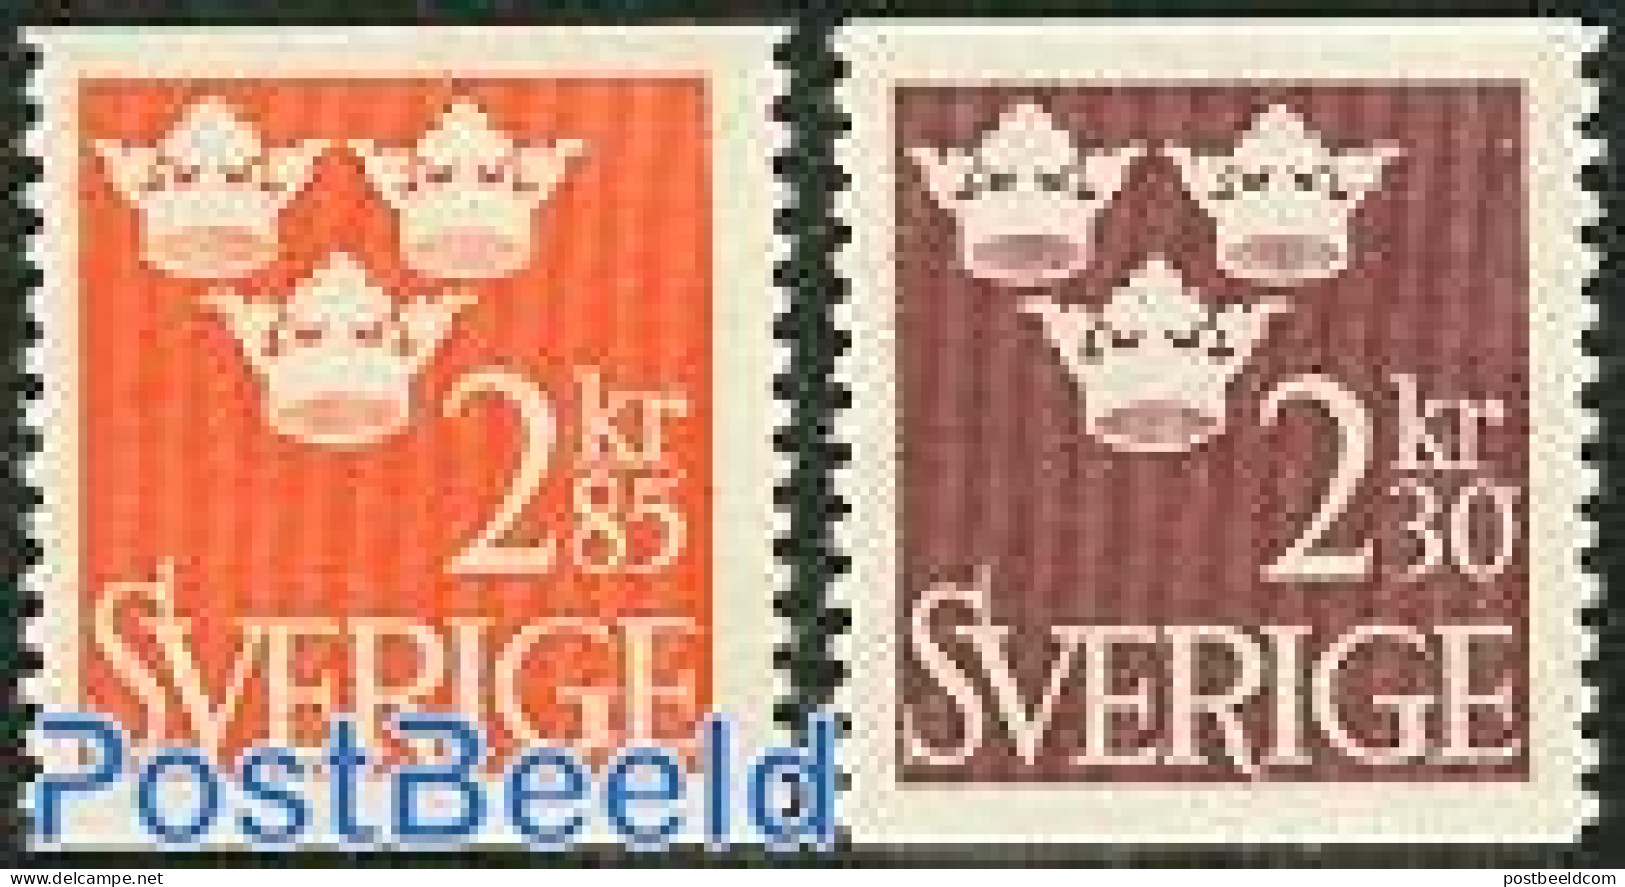 Sweden 1965 Definitives 2v, Mint NH - Ongebruikt